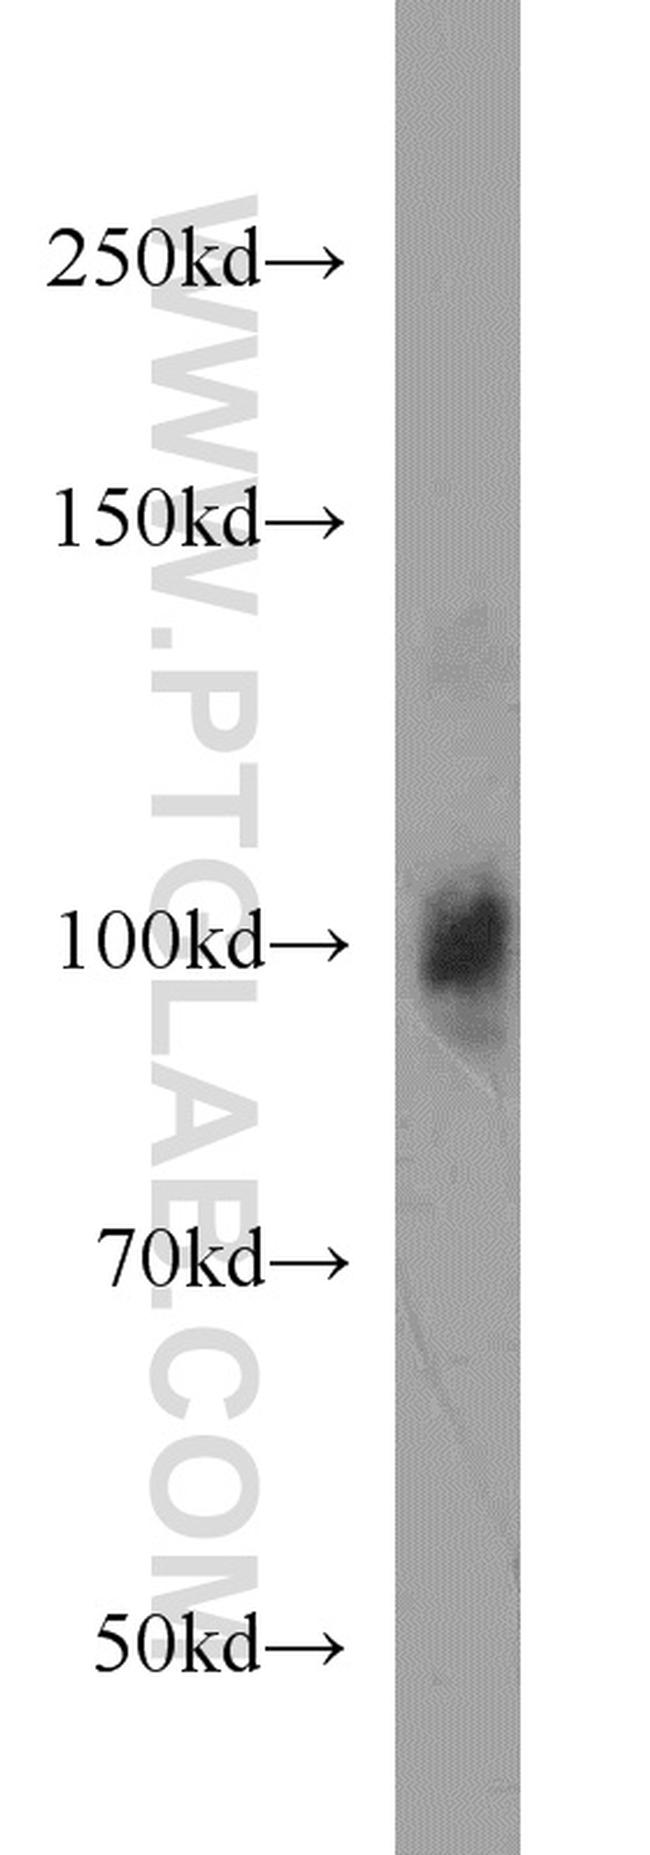 LONP1 Antibody in Western Blot (WB)